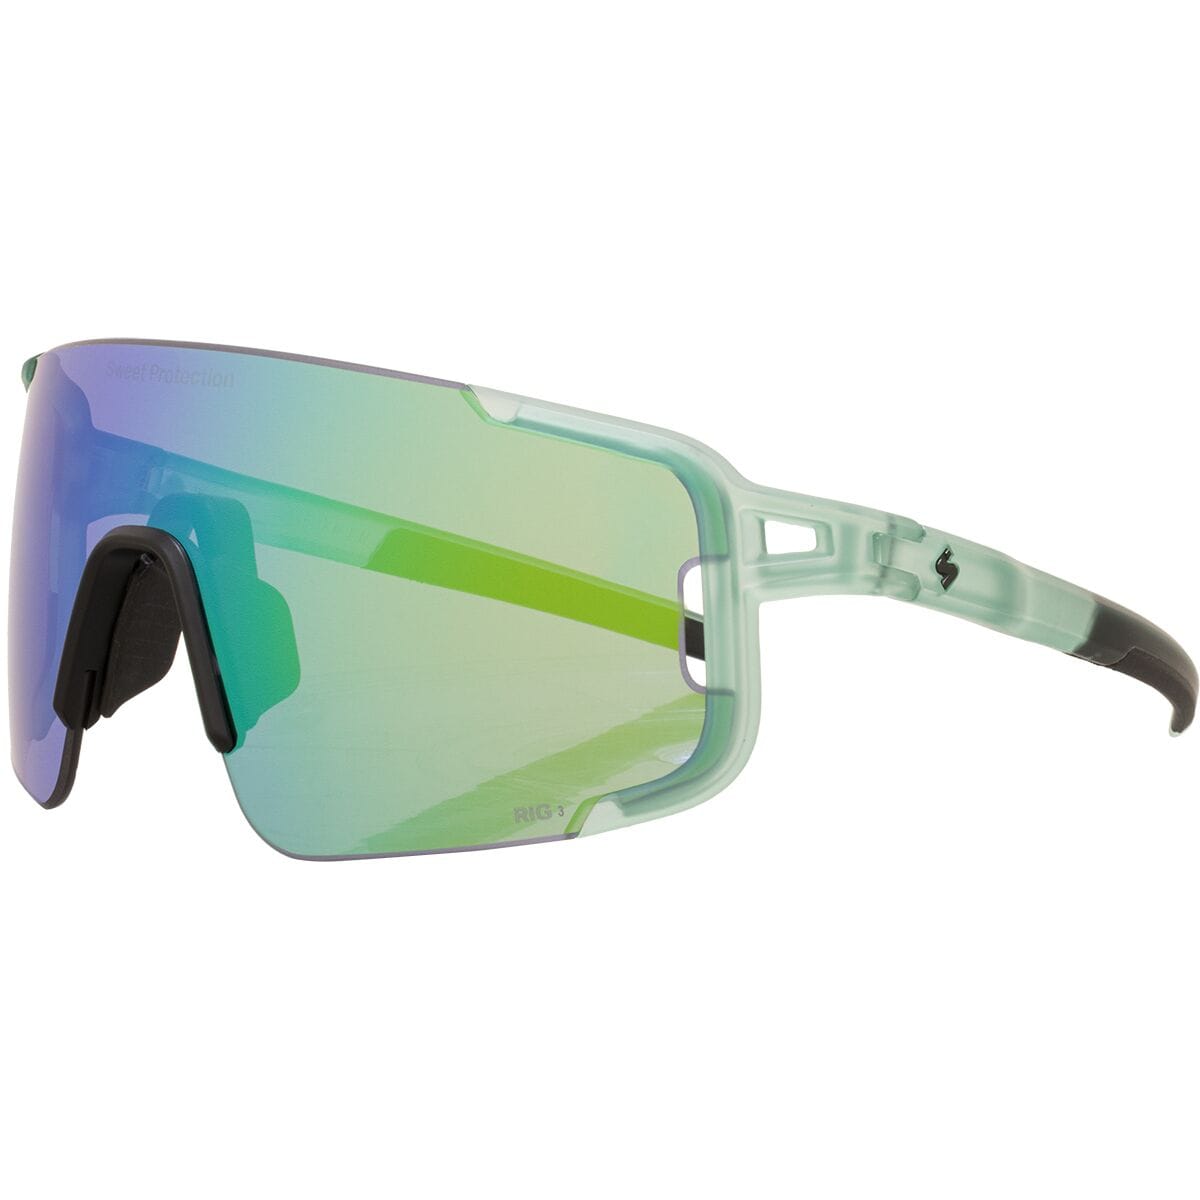 цена Солнцезащитные очки ronin rig reflect Sweet Protection, цвет rig emerald/crystal misty turquoise